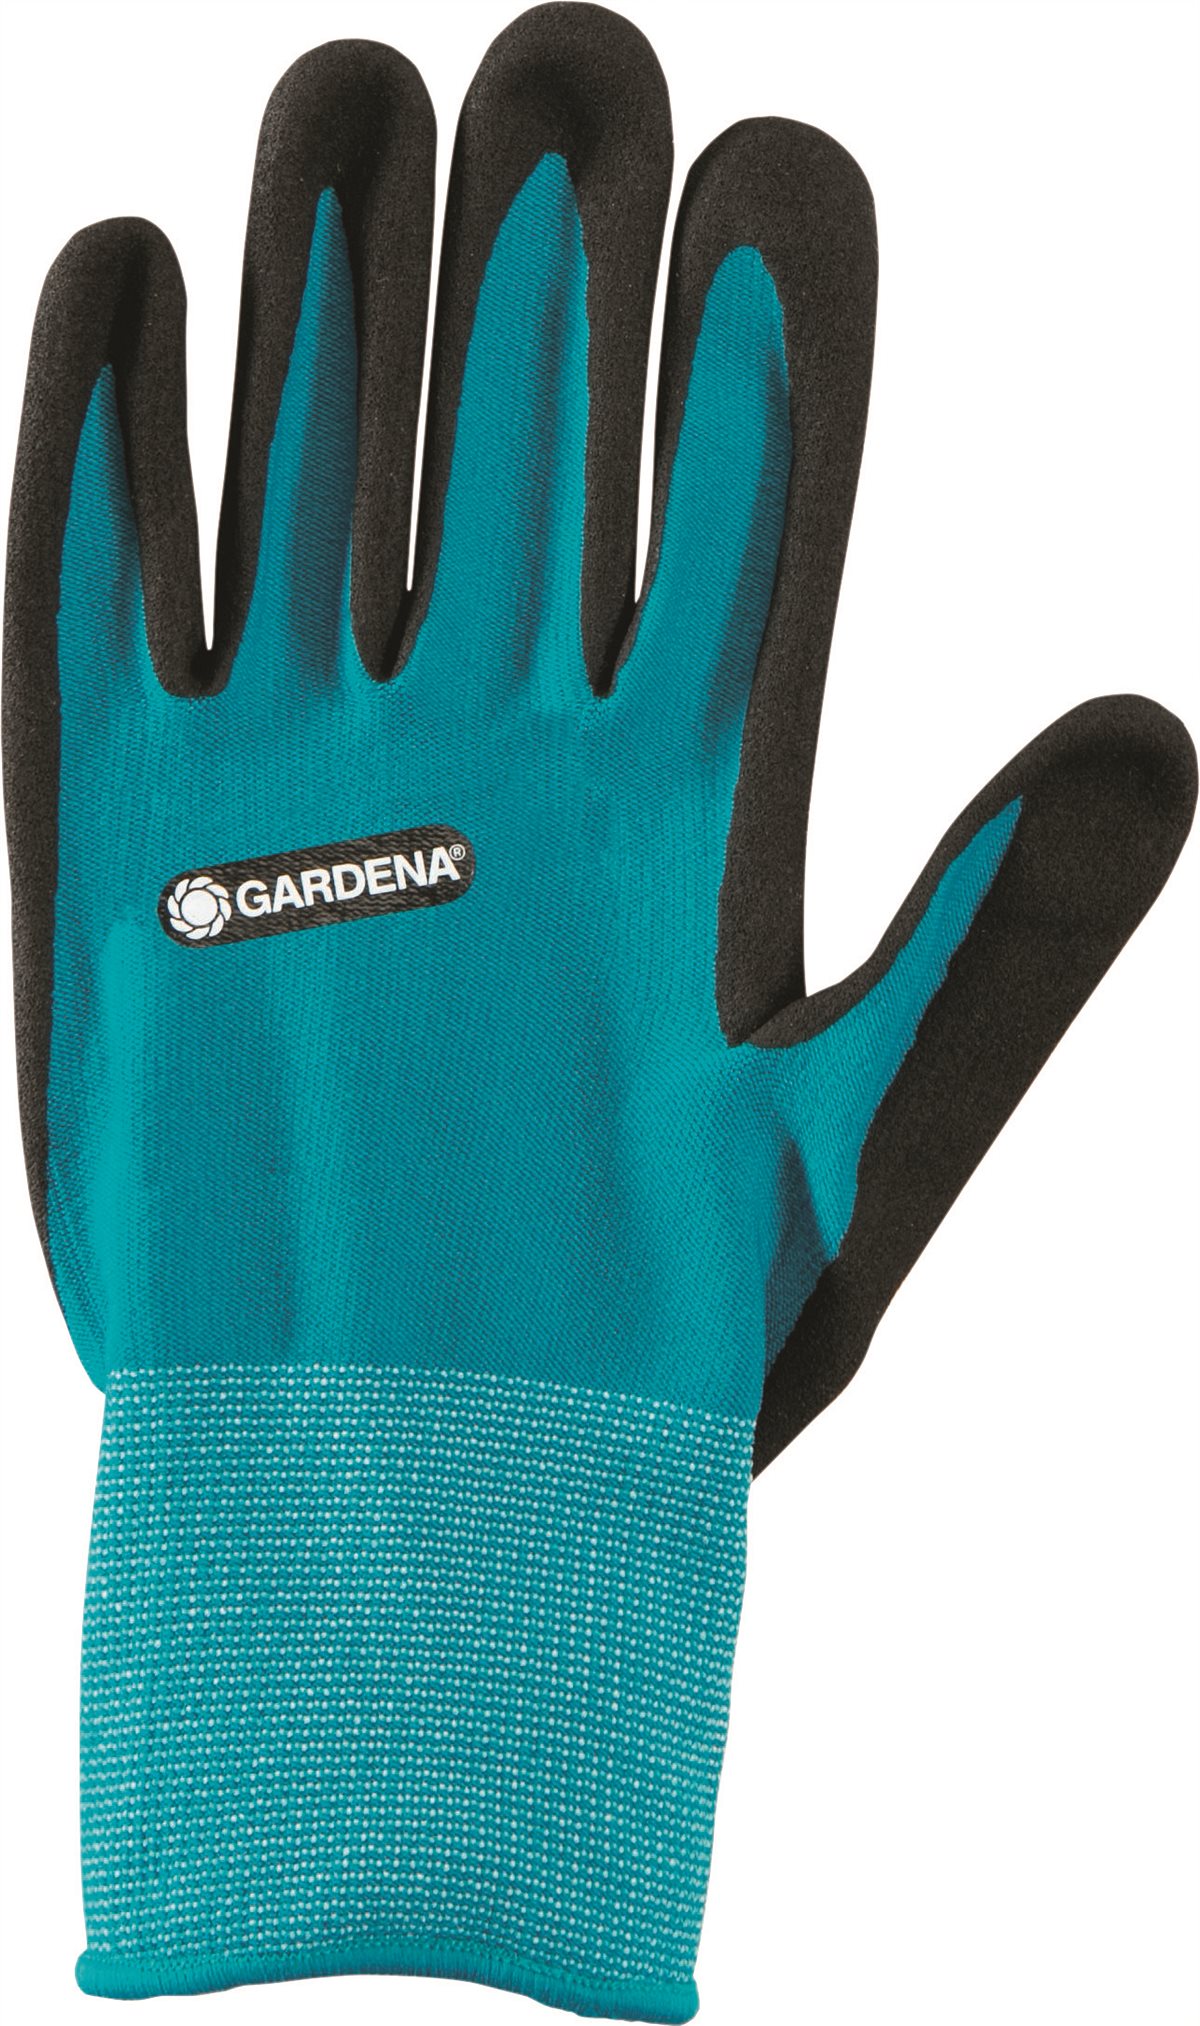 GARDENA Planting and Soil Gloves